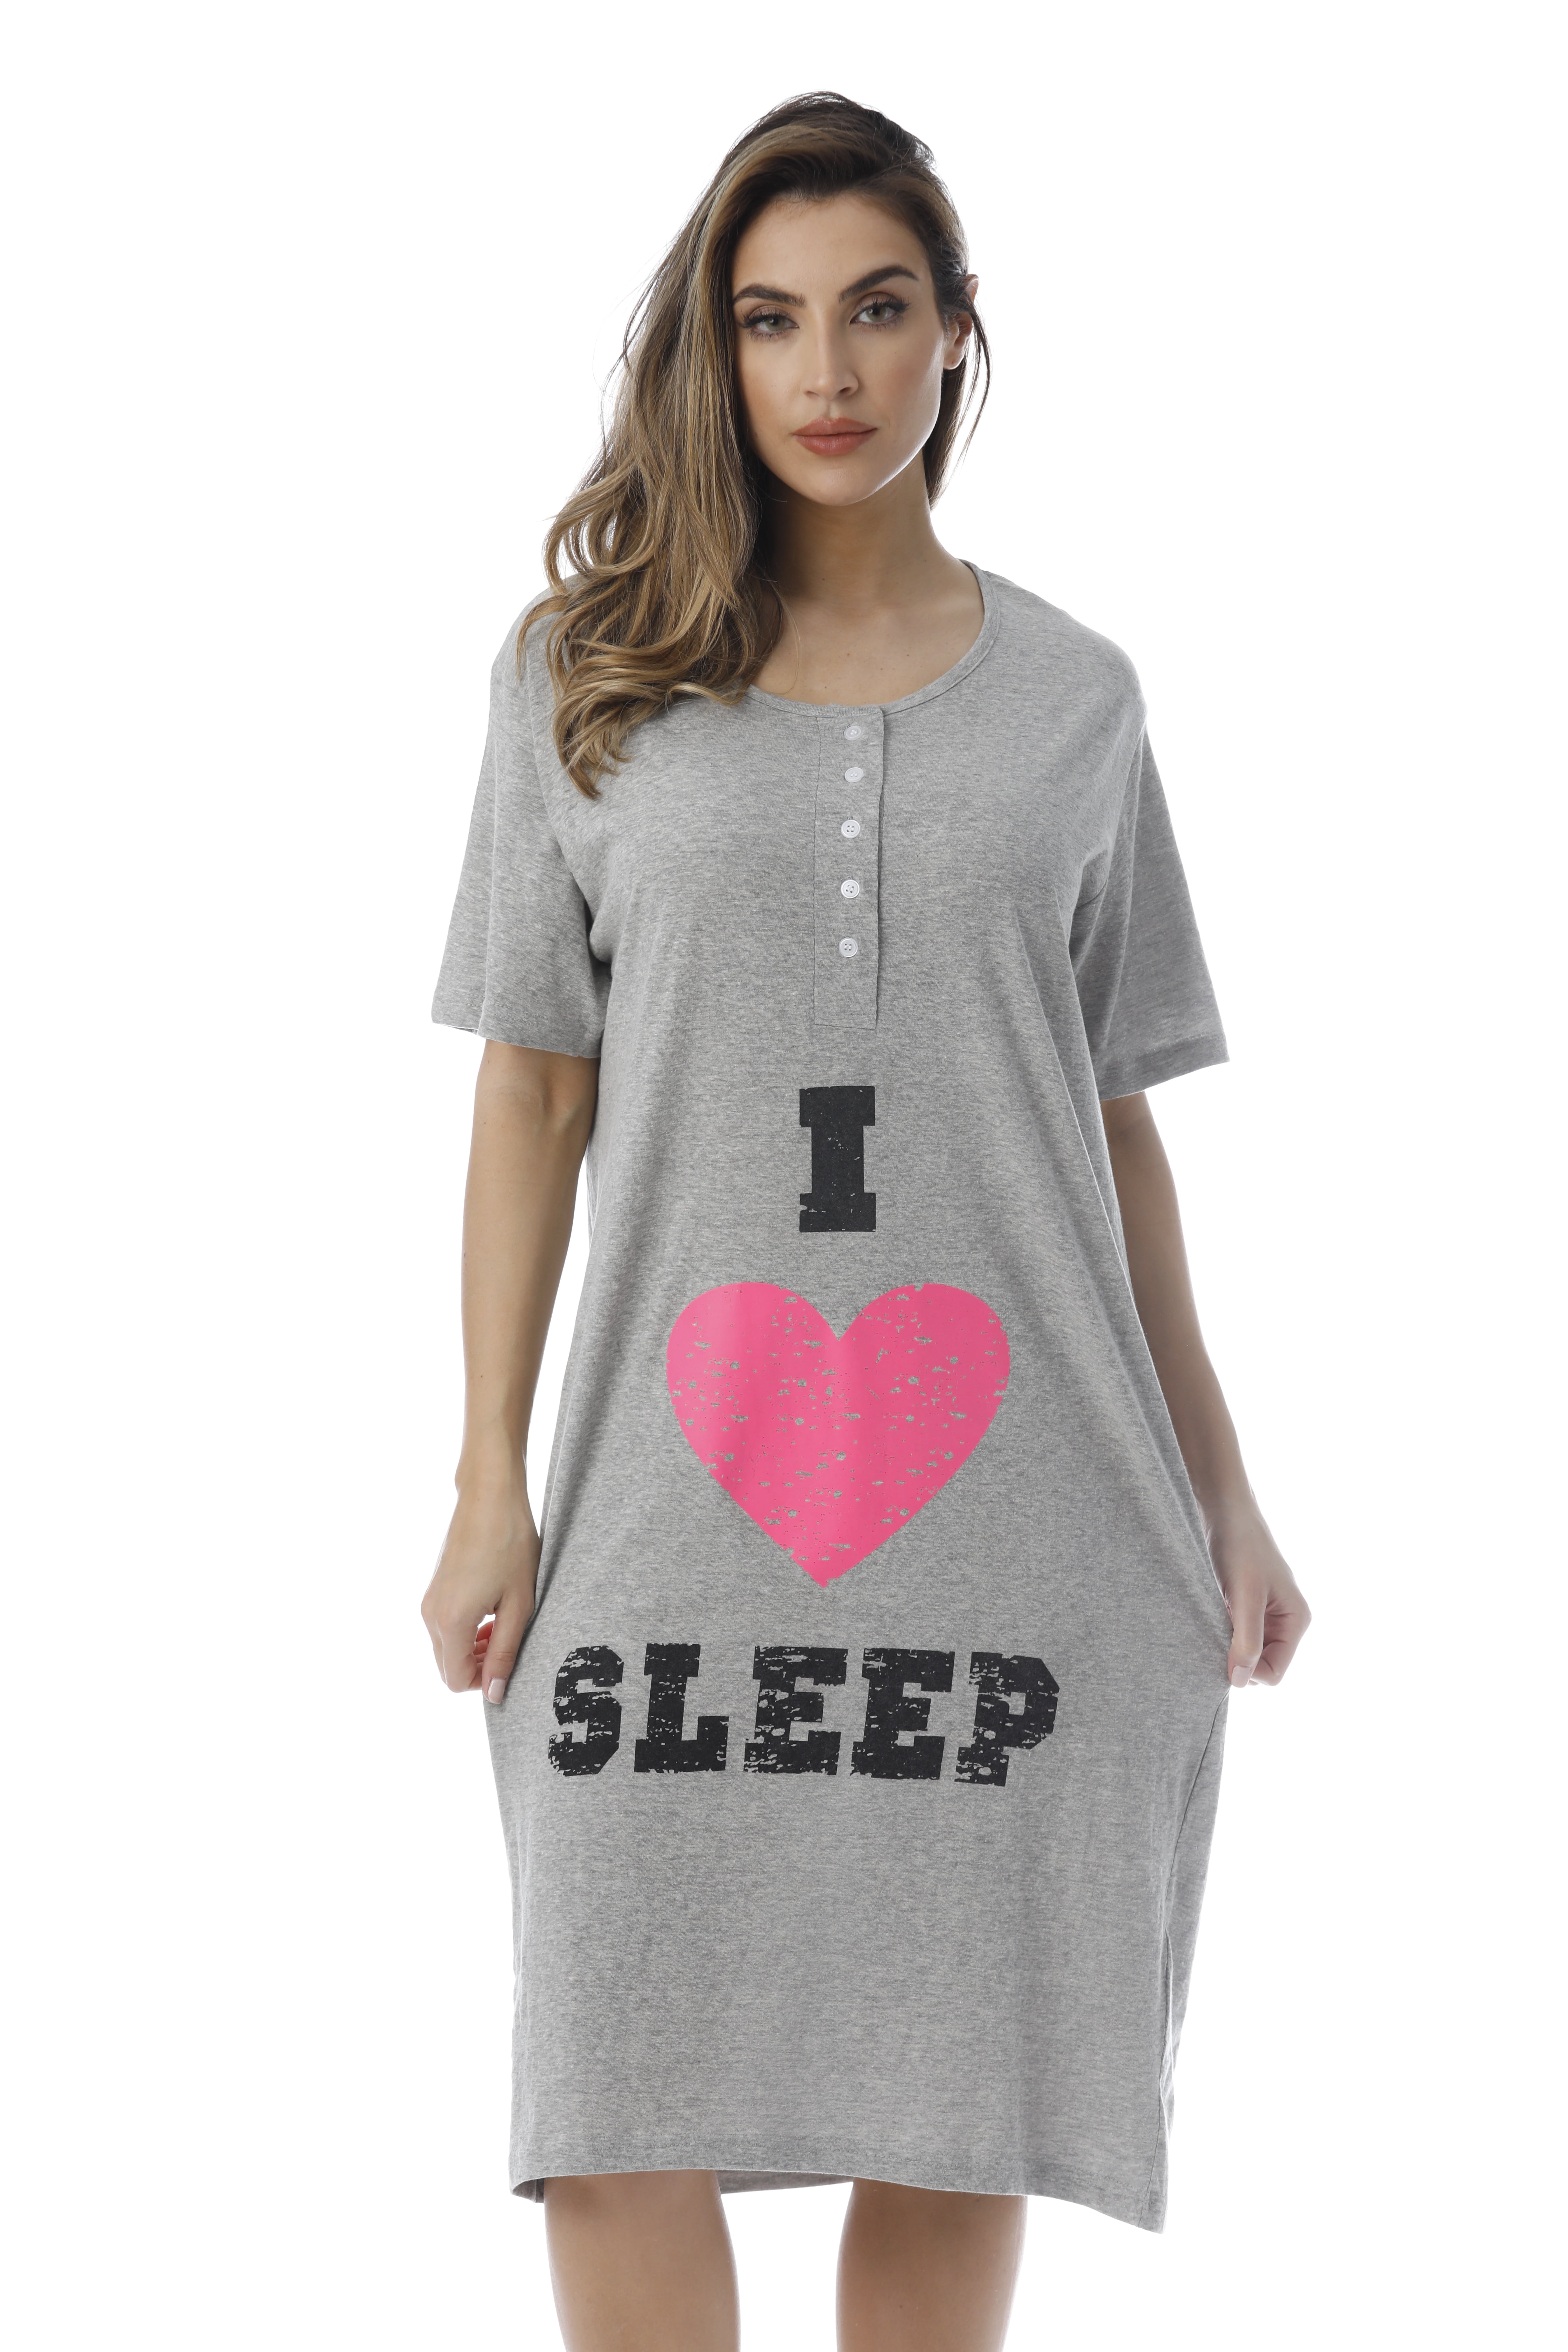 Just Love 100% Cotton Spaghetti Strap Stripe Womens Nightgown with Lace Trim